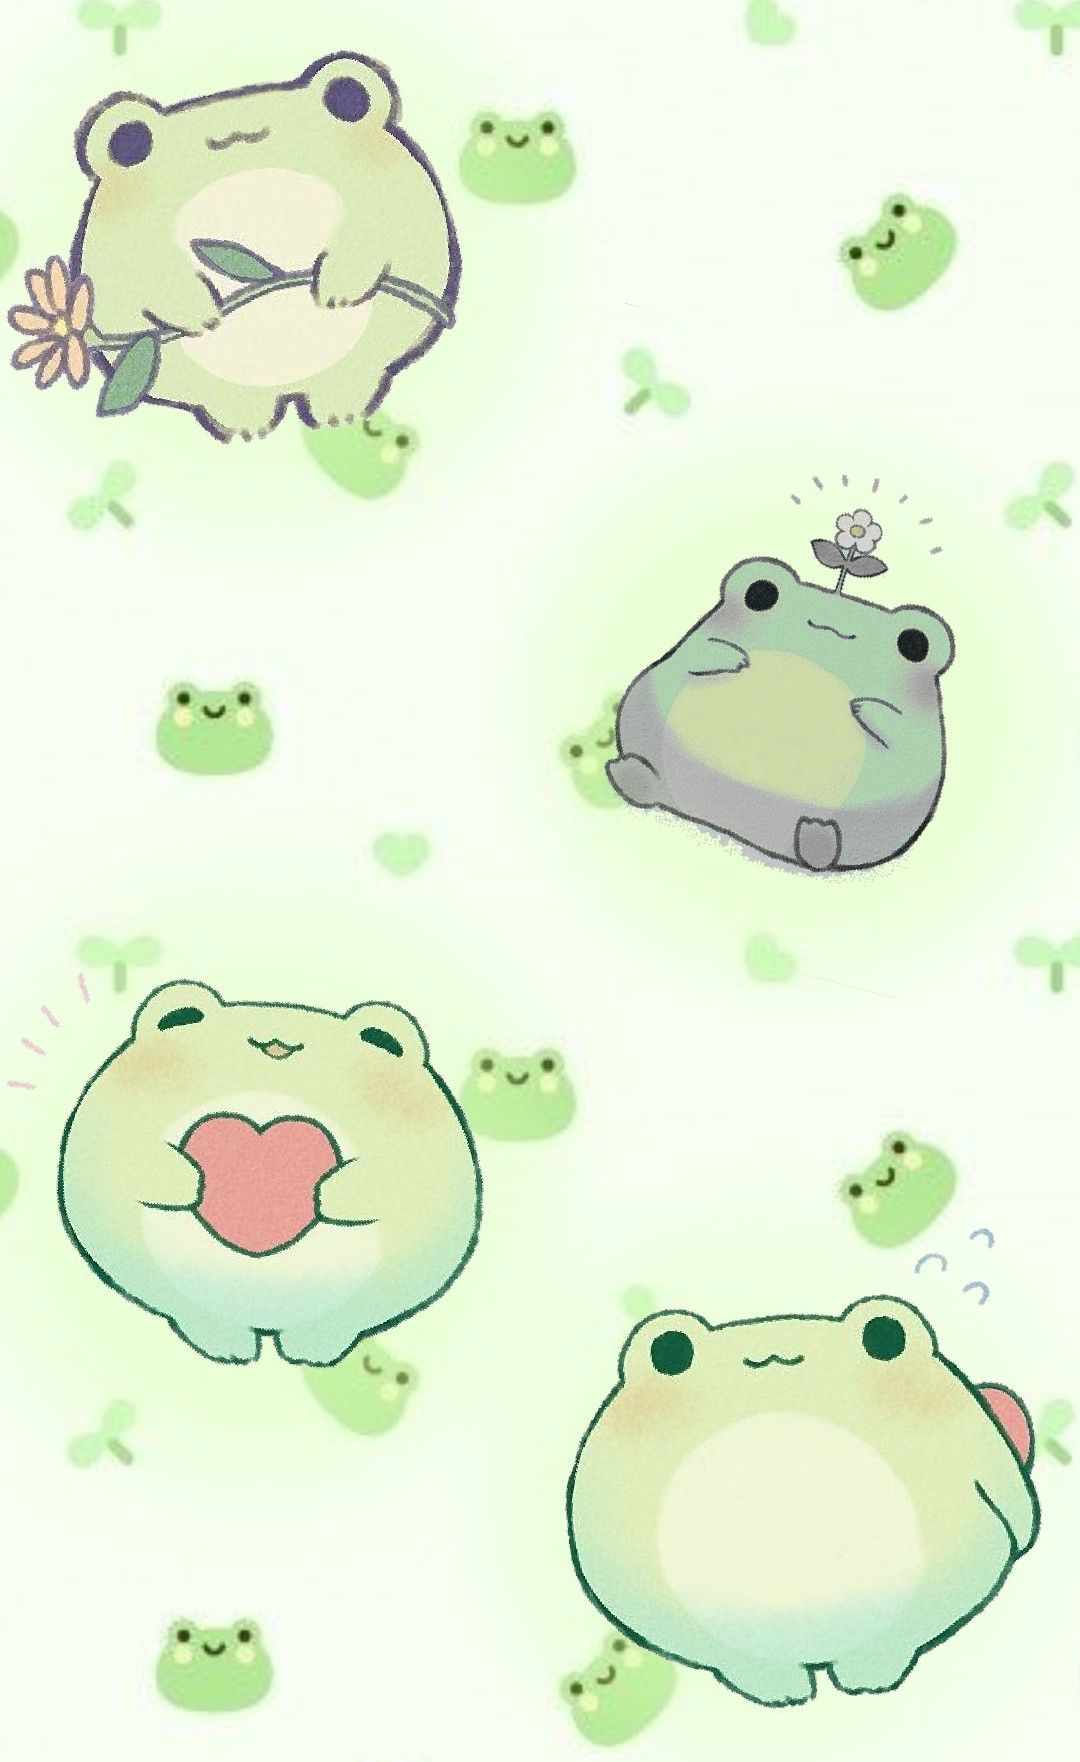 Cute Frog Wallpaper. Cute little drawings, Frog wallpaper, Cute doodles